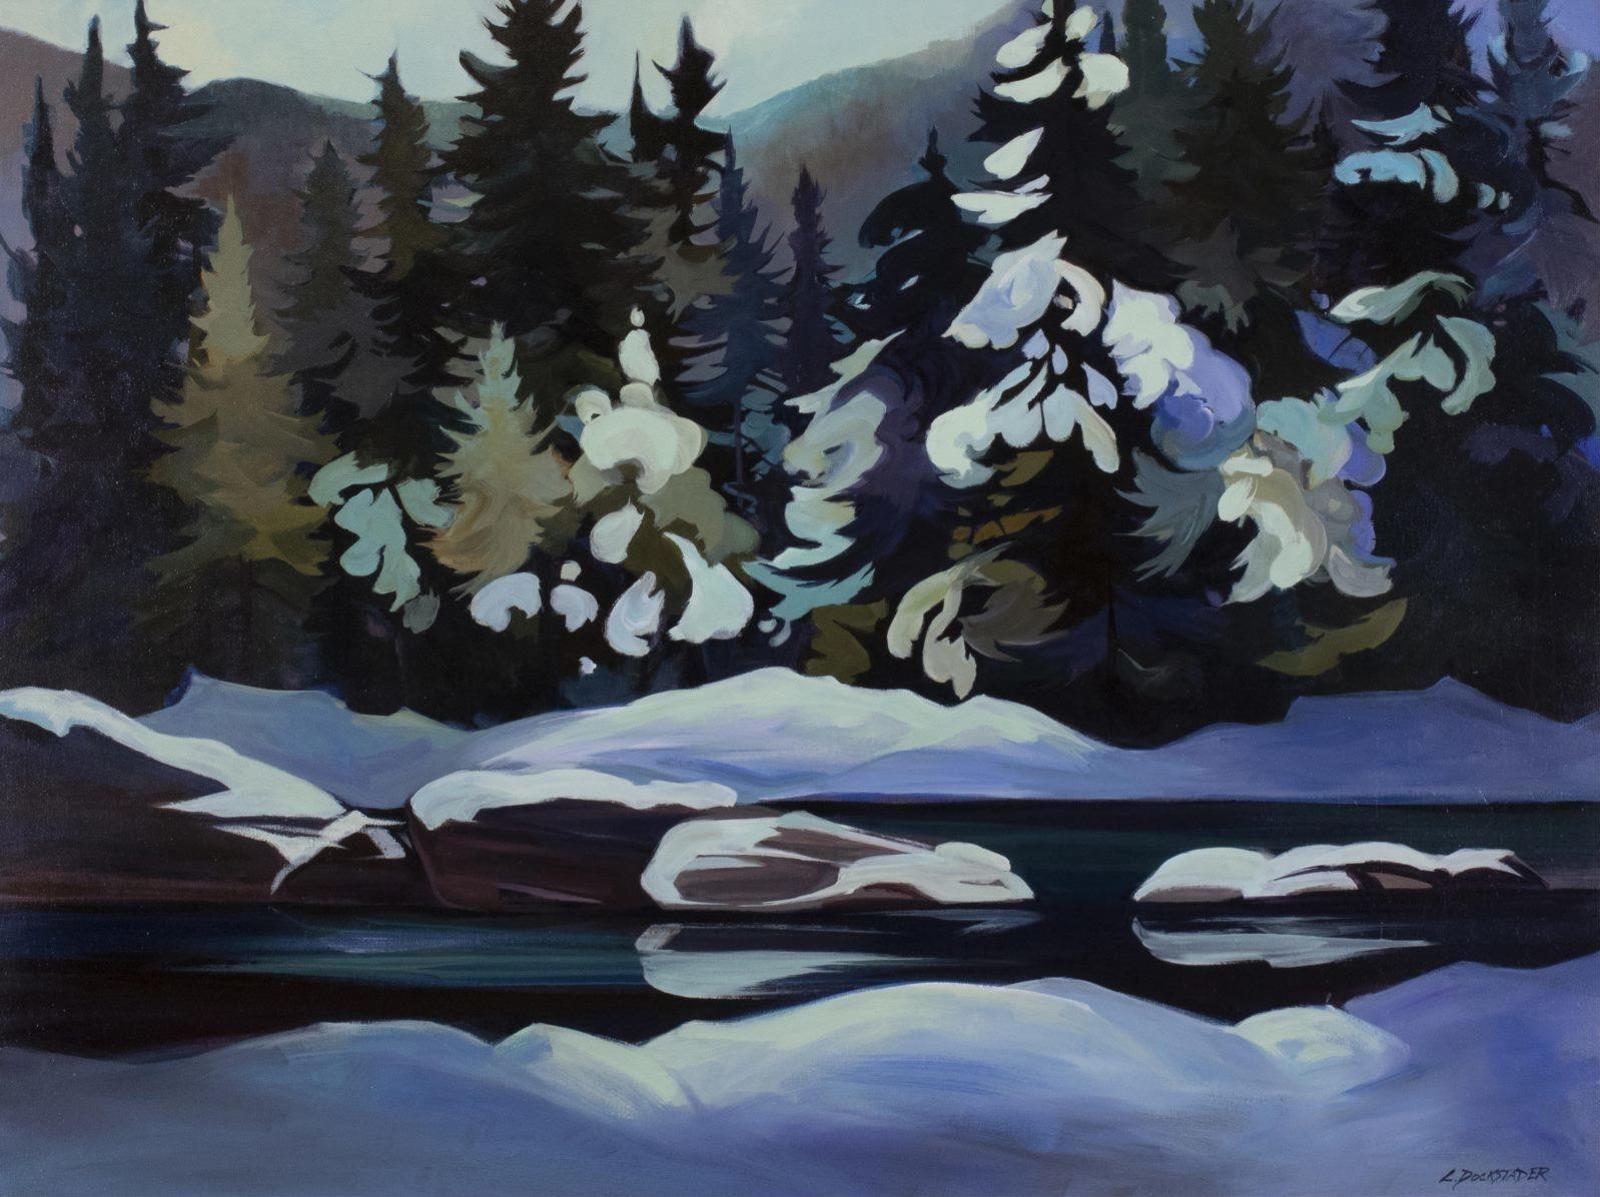 Lorna Dockstader (1947) - Snowy Shapes Along The Elbow River; 2001